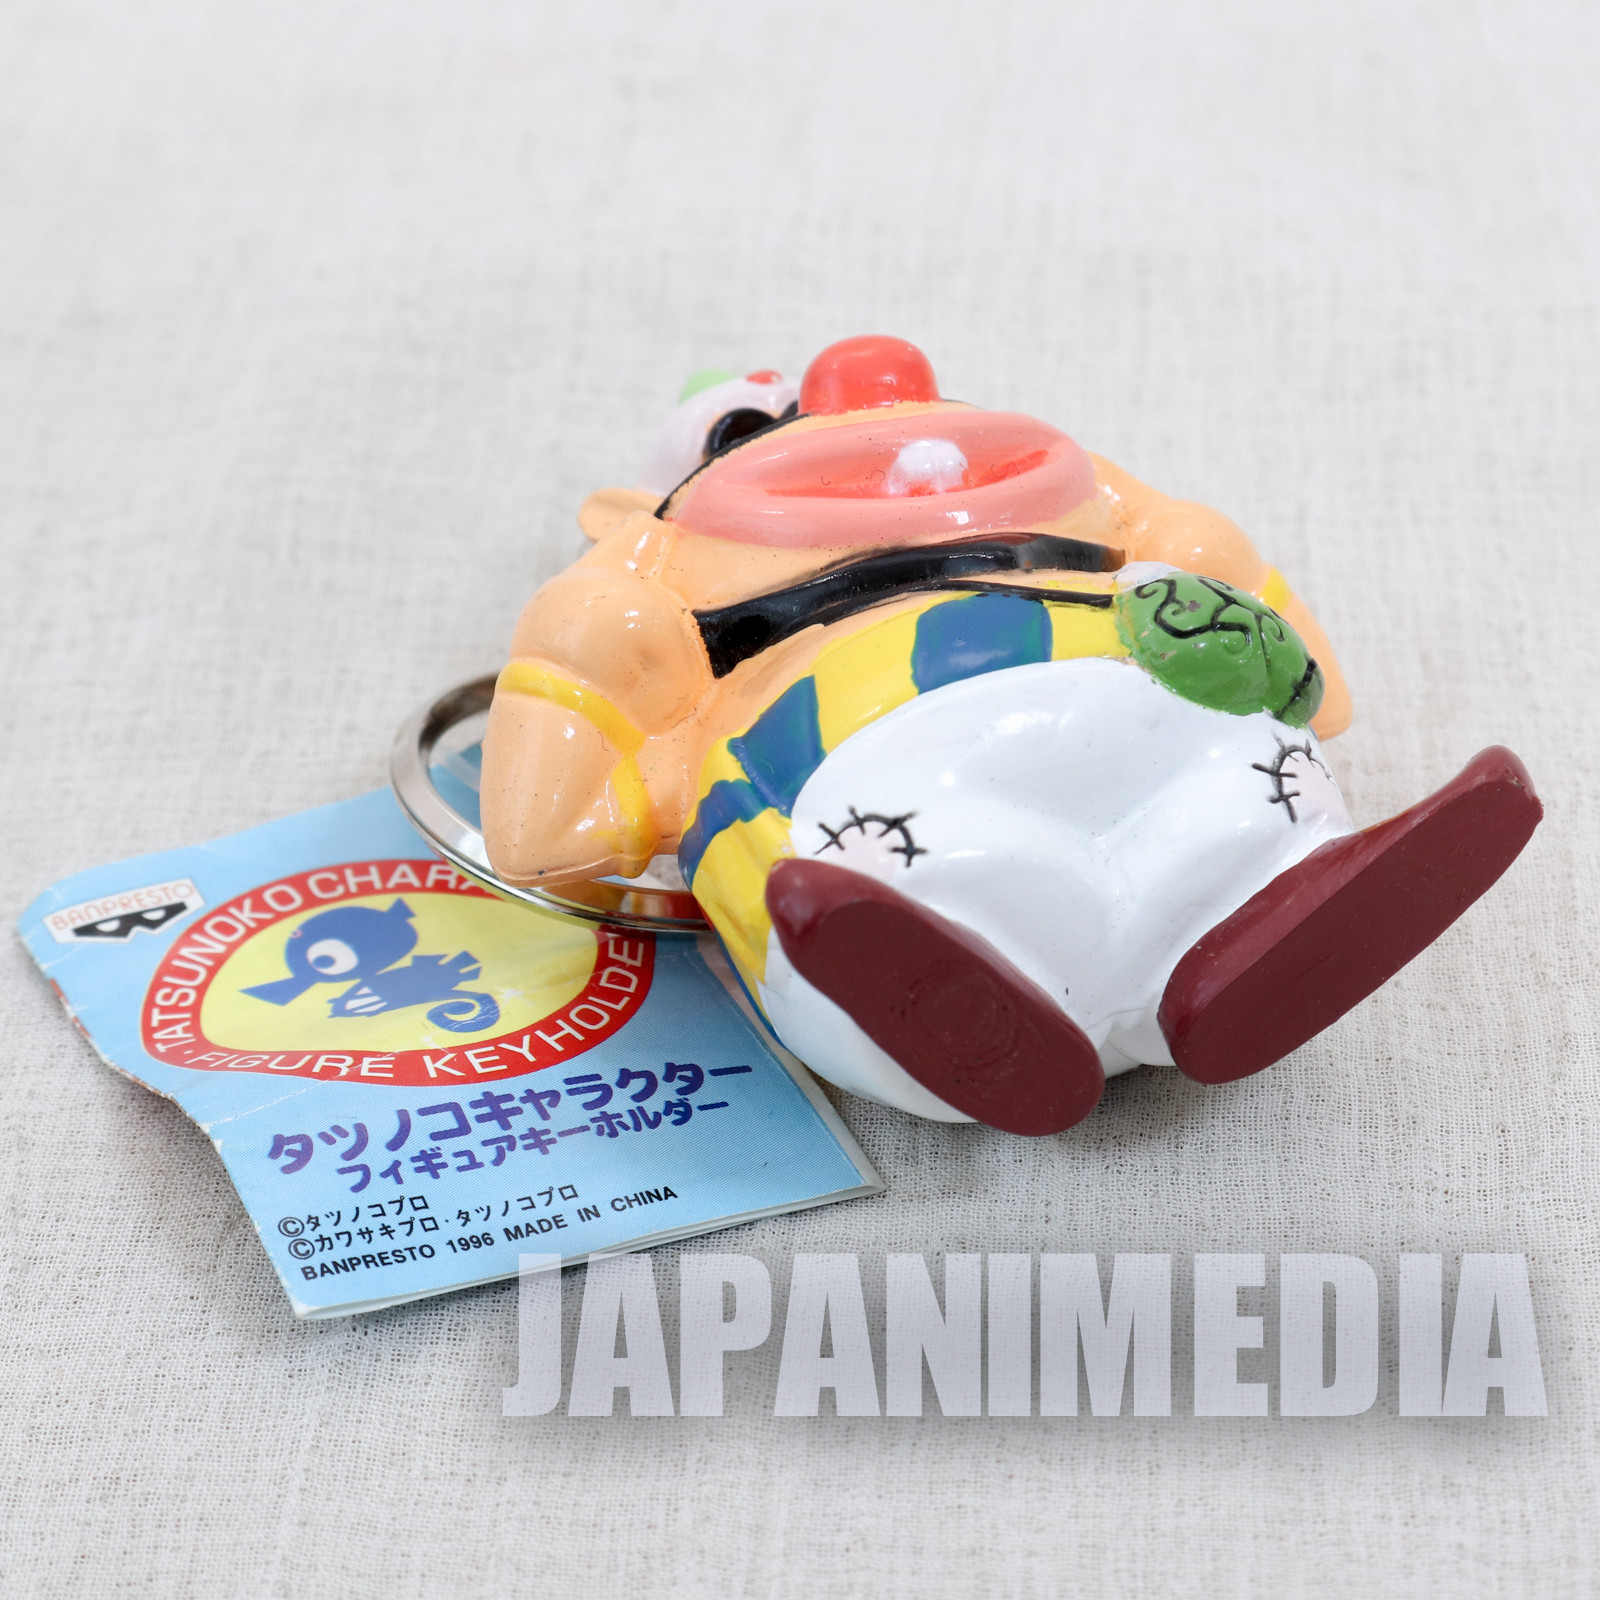 The Genie Family Hakushon Daimaoh Bob Figure Key Chain Tatsunoko Pro JAPAN ANIME